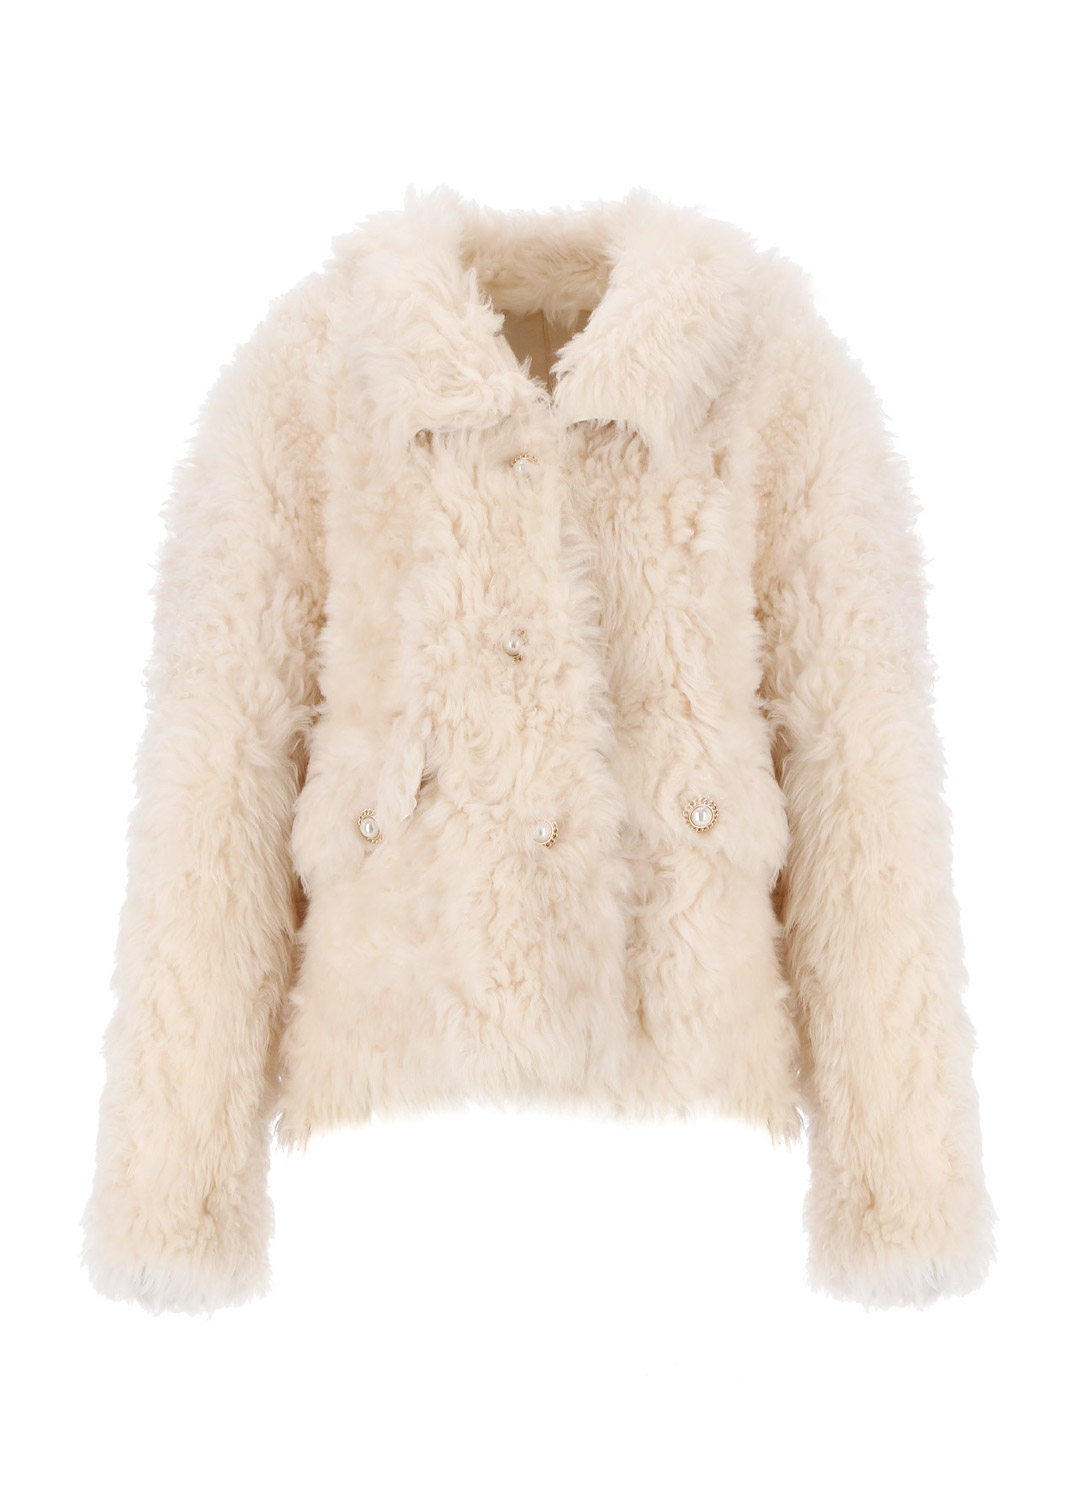 Pearl CL lamb jacket [Pearl]